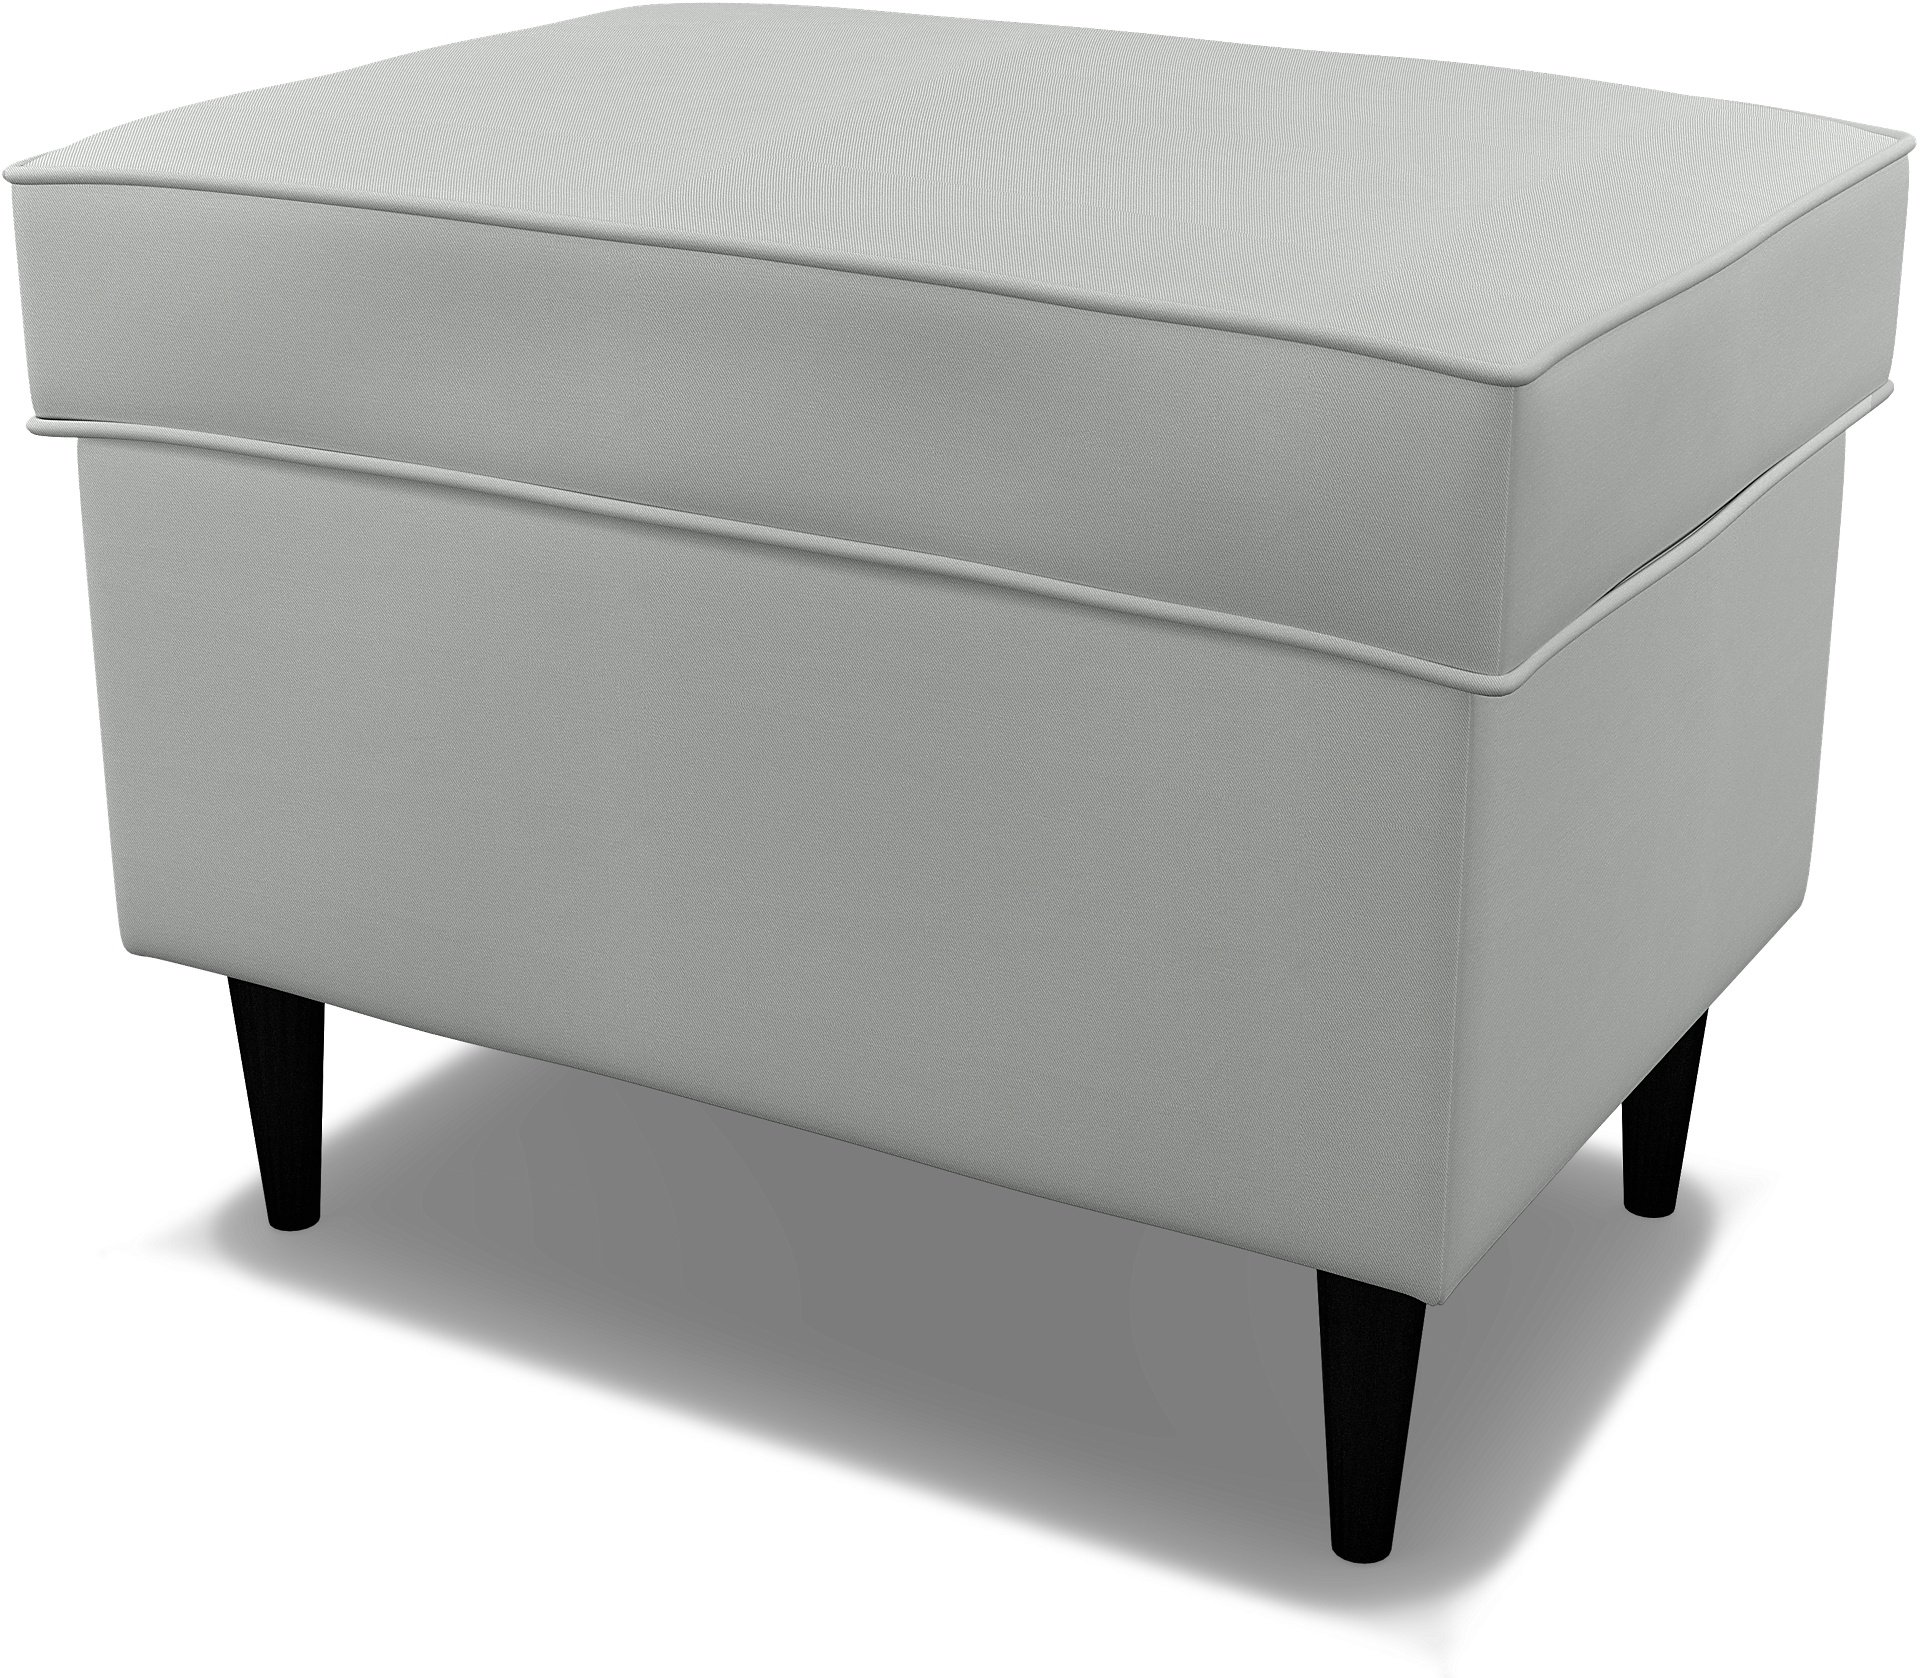 IKEA - Strandmon Footstool cover, Silver Grey, Cotton - Bemz